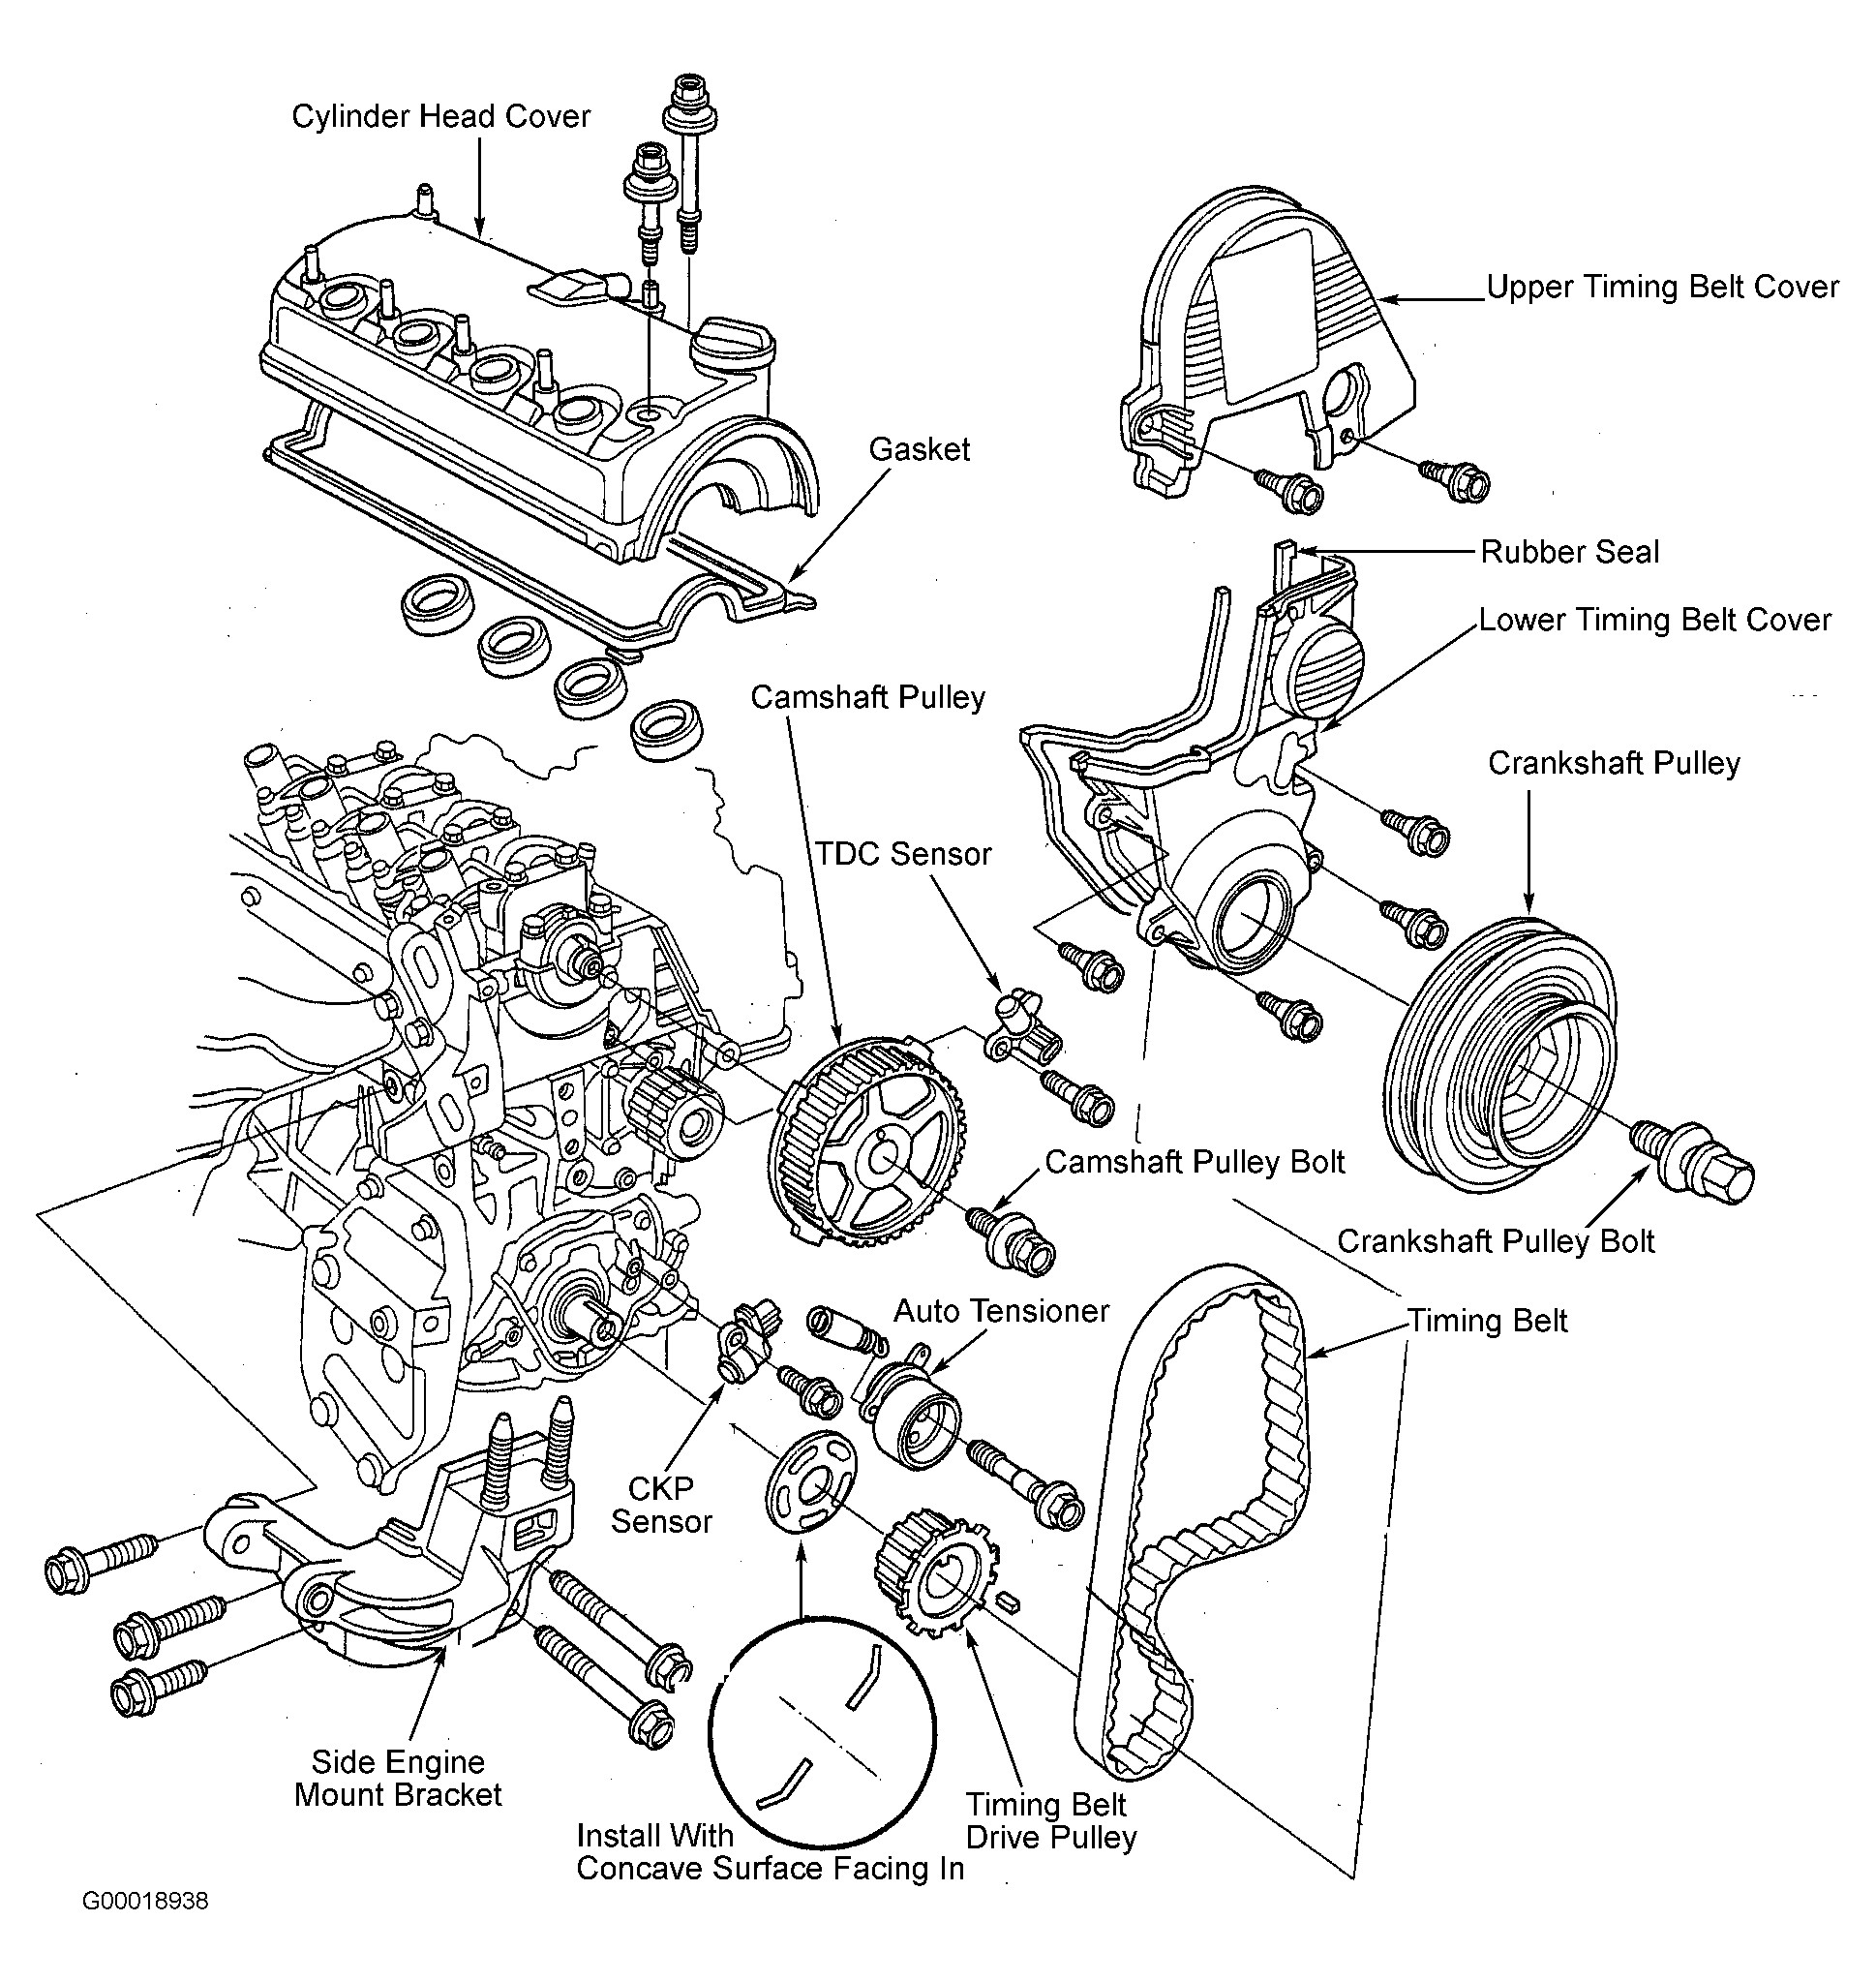 Honda Engine Parts Diagram Honda Civic Parts Diagram Wonderful Likeness Serpentine and Timing Of Honda Engine Parts Diagram